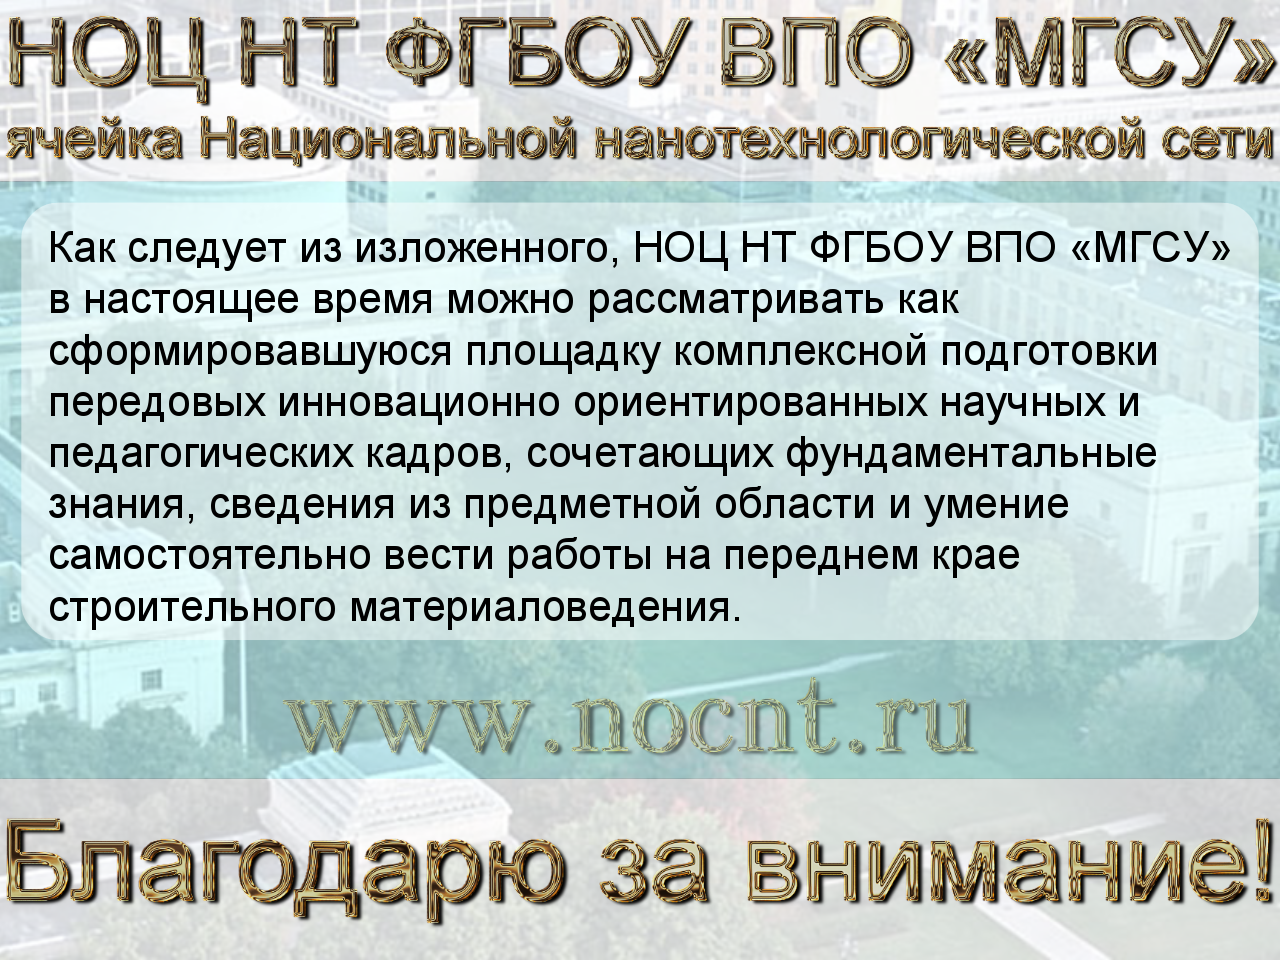 www.nocnt.ru